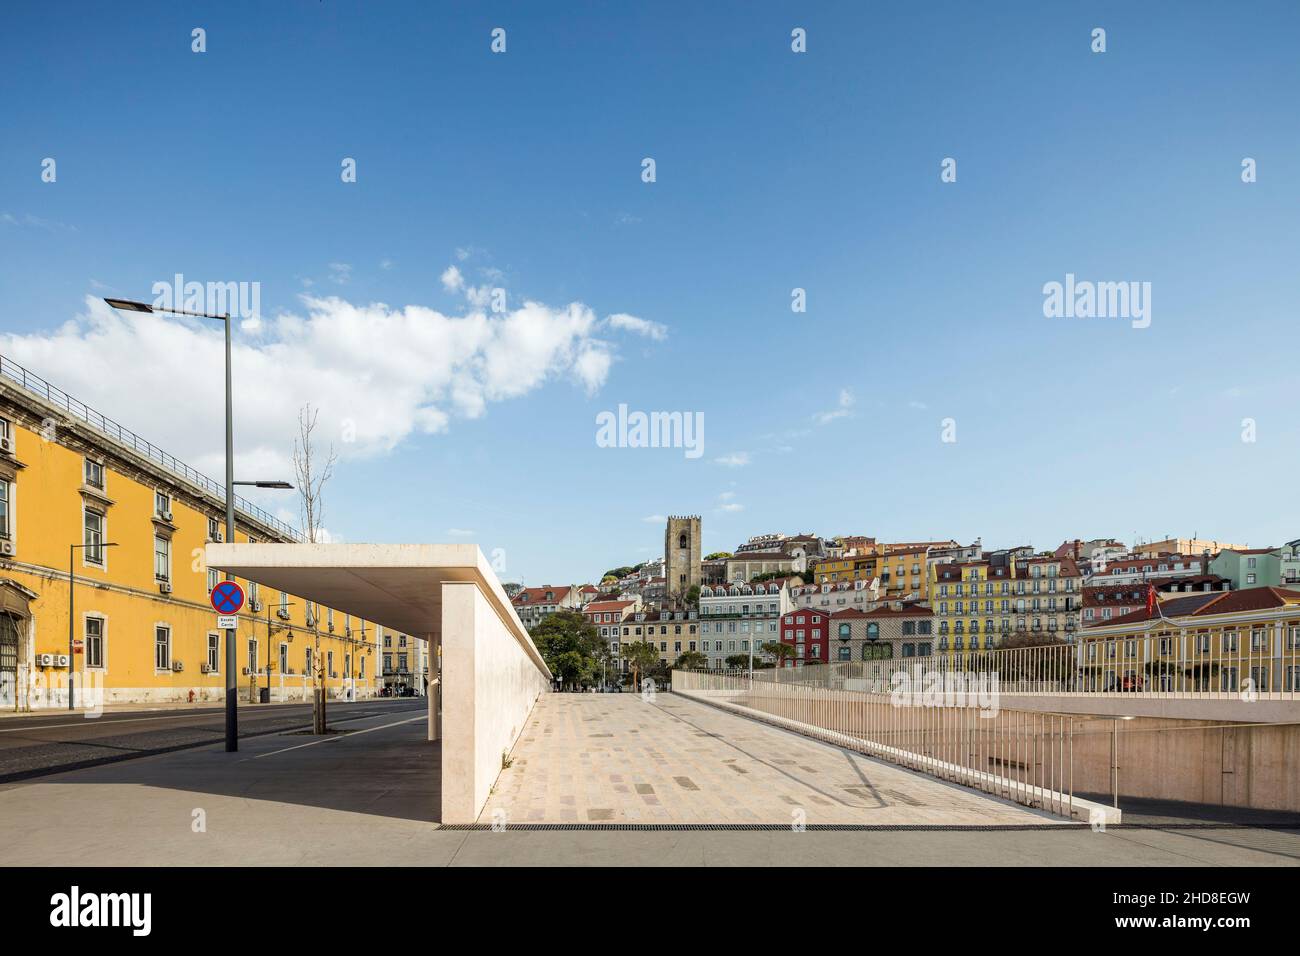 Arrêt de bus, parking et façades de la ville.Campo das Ceboles - Portas do  Mar, Lisbonne, Portugal.Architecte: carrilho da graça arquitectos, 2018  Photo Stock - Alamy